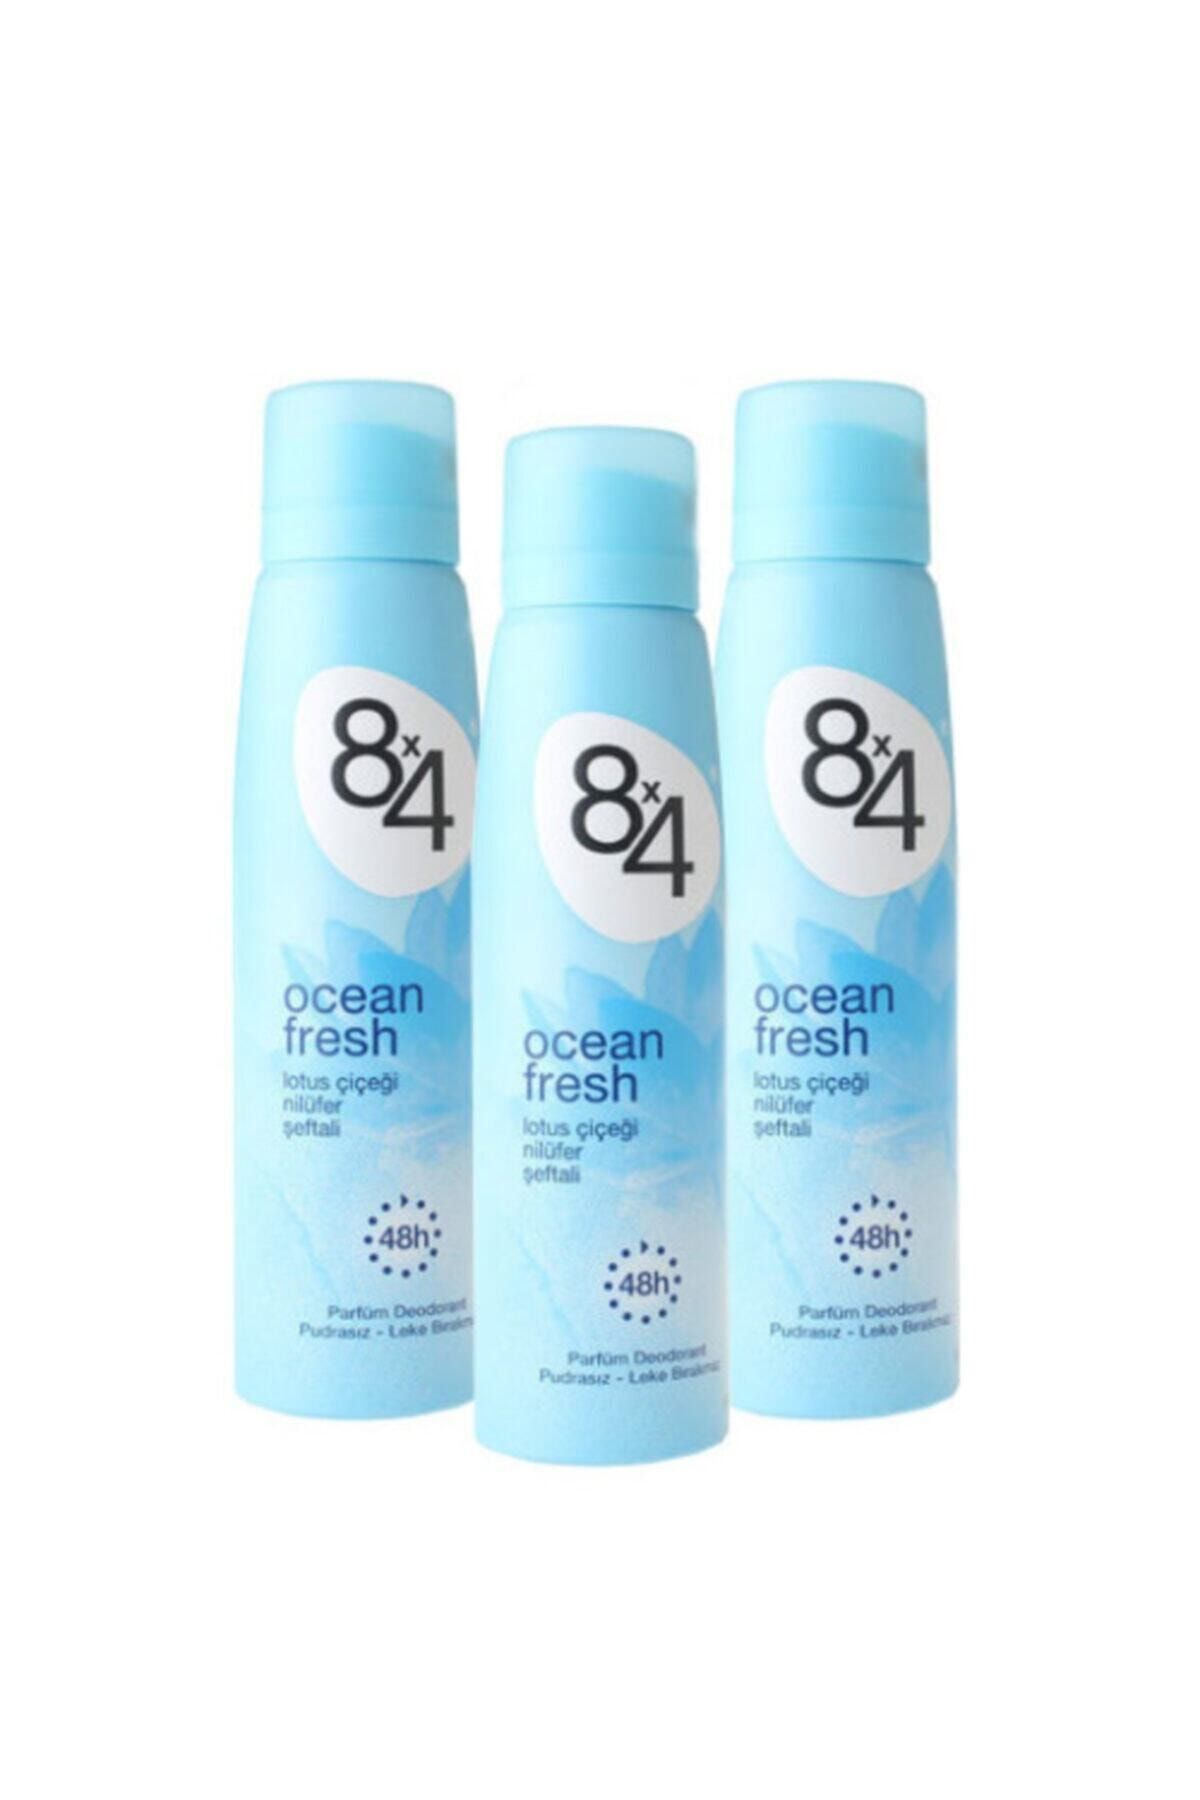 8x4 Ocean Fresh 150 ml Deodorant X 3